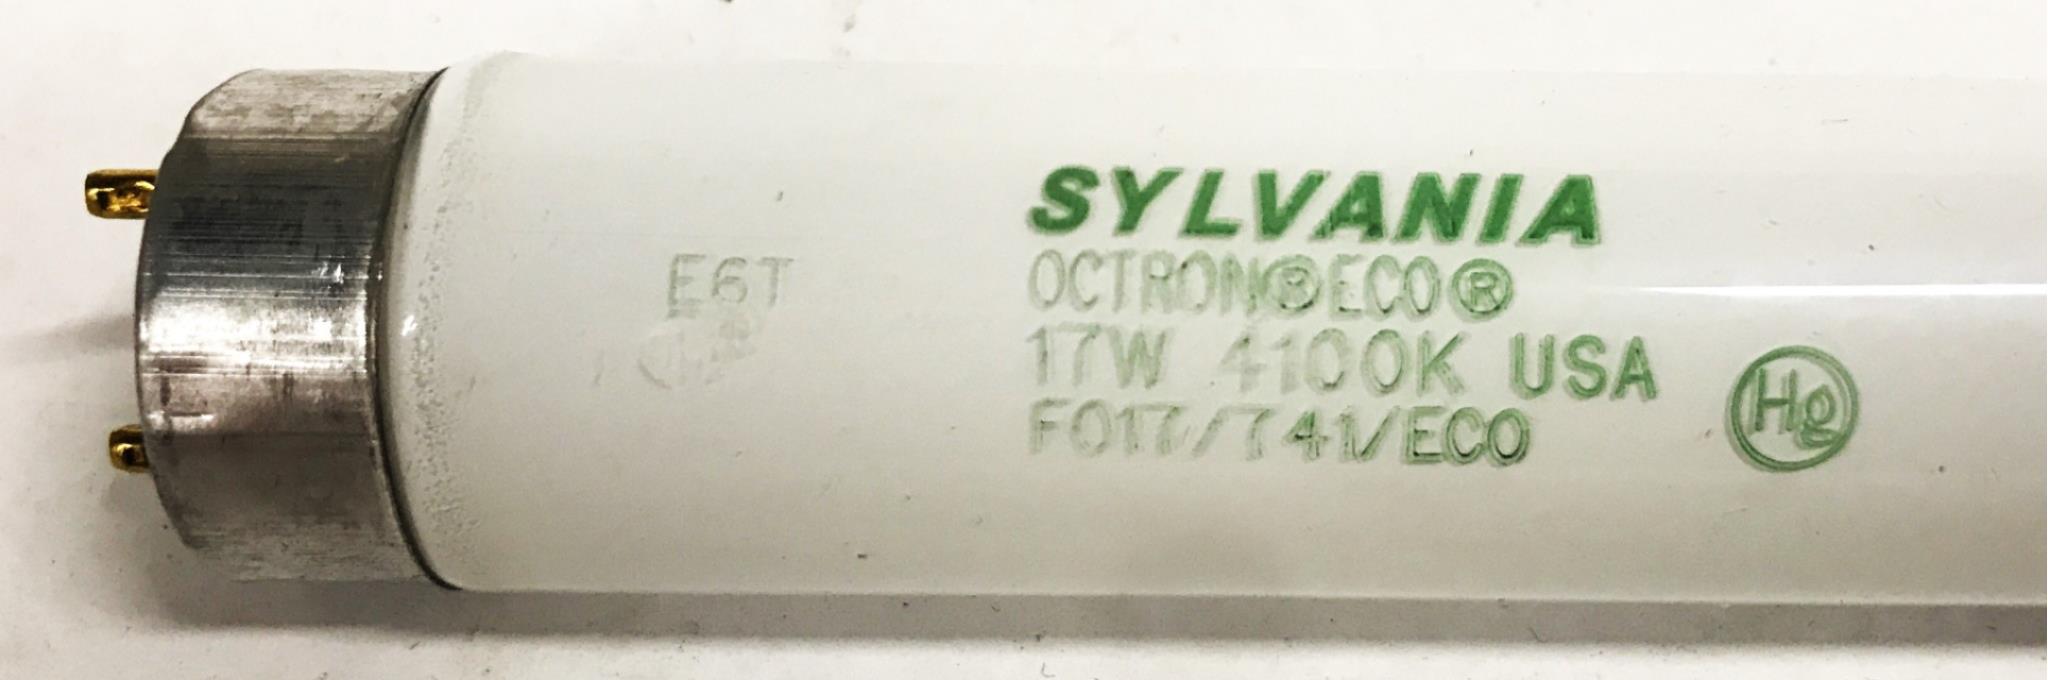 Sylvania Fluorescent Light Bulbs FO17/T41/ECO [Box of 23] NOS